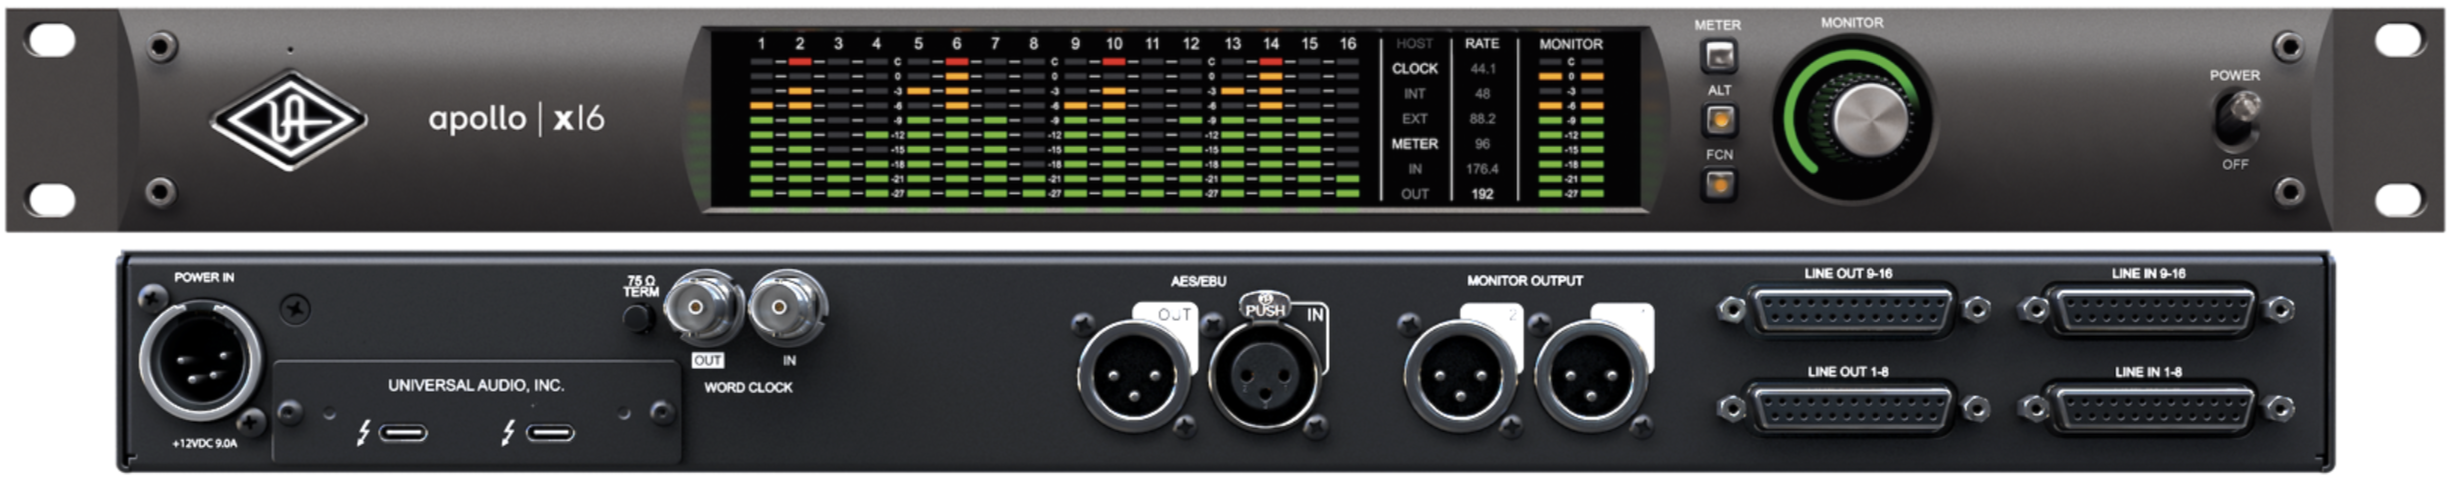 Universal Audio Apollo X16 - Thunderbolt audio interface - Variation 4